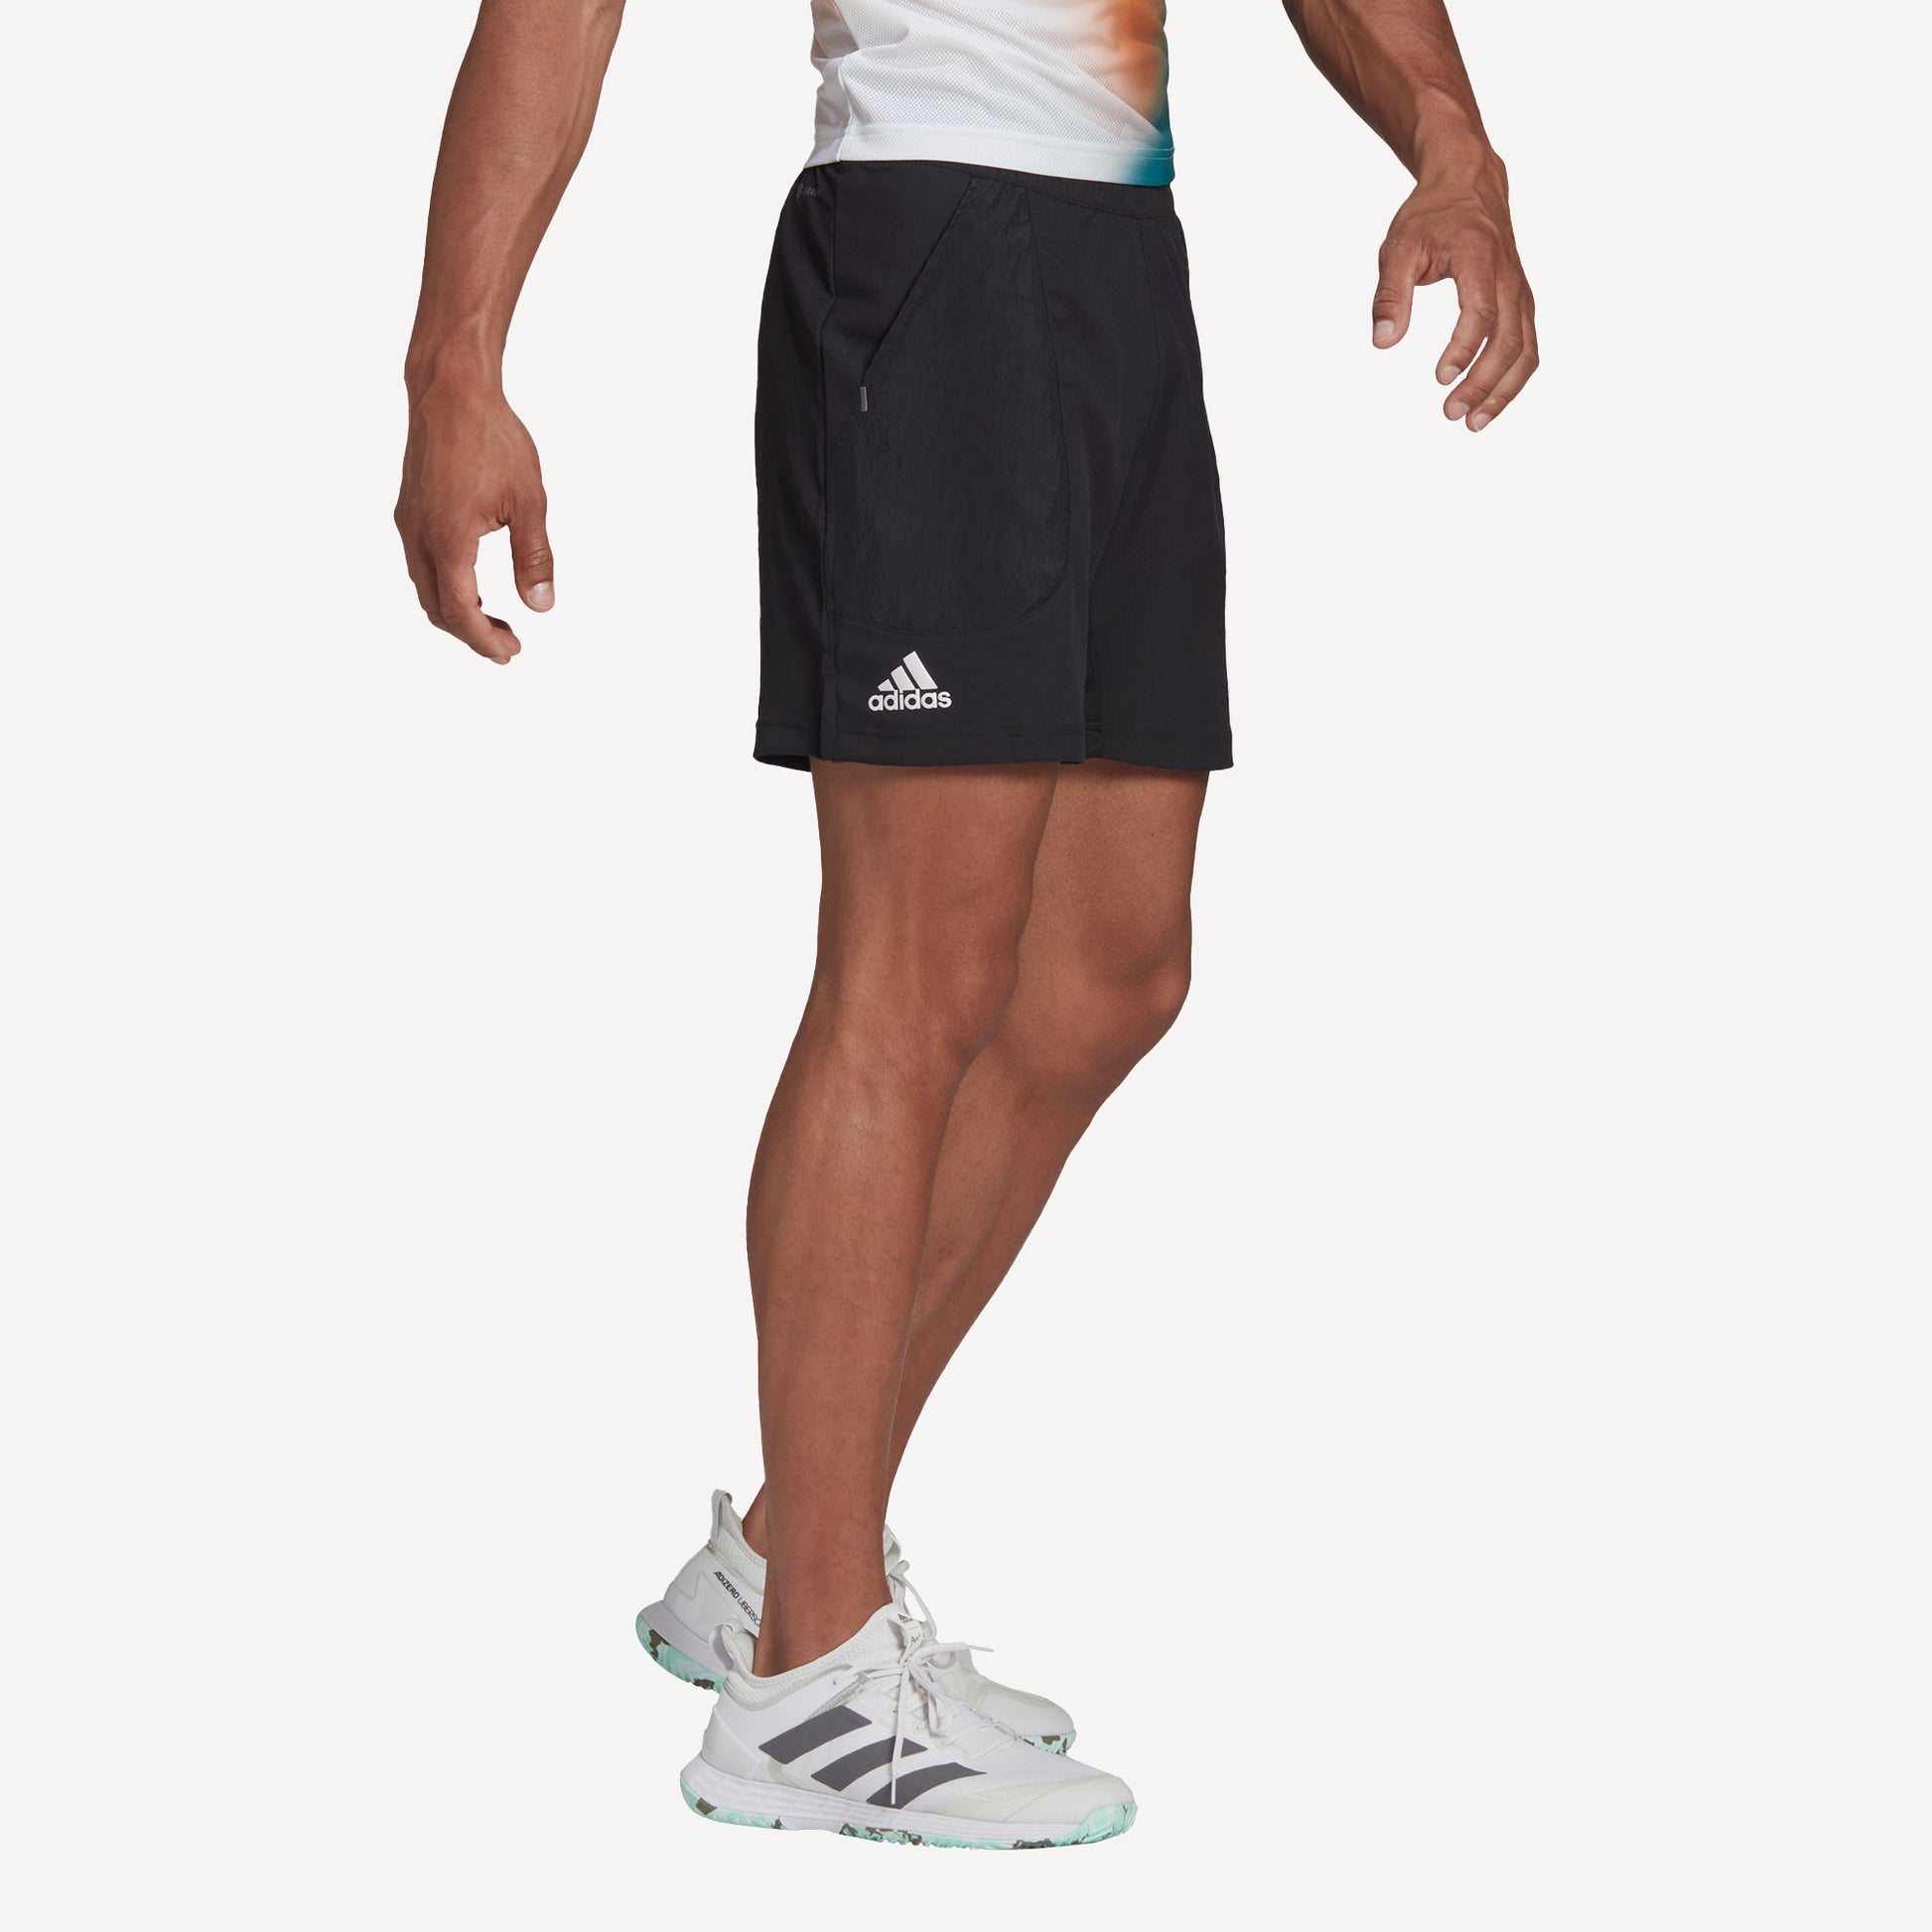 adidas Melbourne Men's 7-Inch Tennis Shorts Black (1)